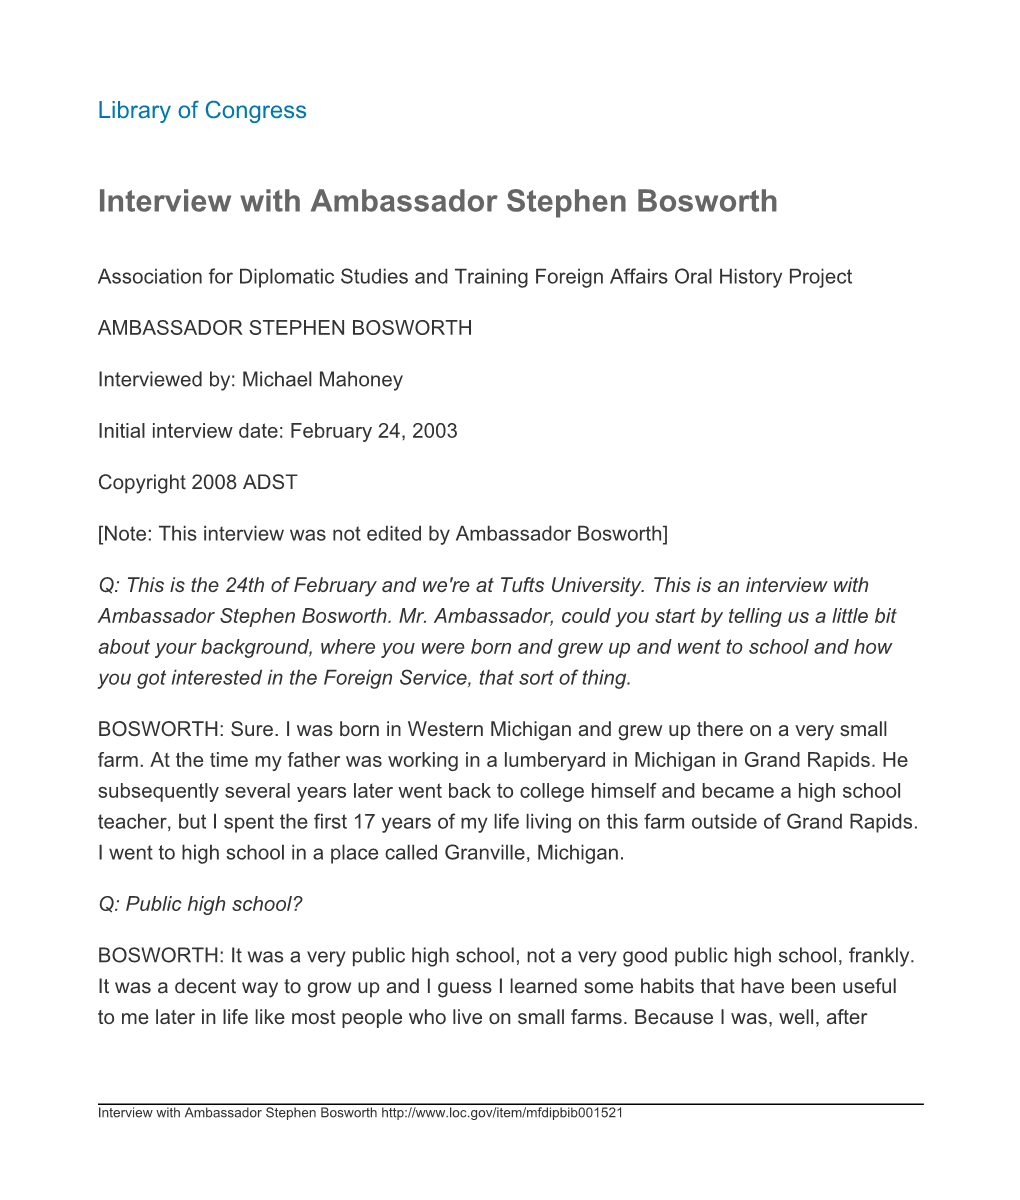 Interview with Ambassador Stephen Bosworth